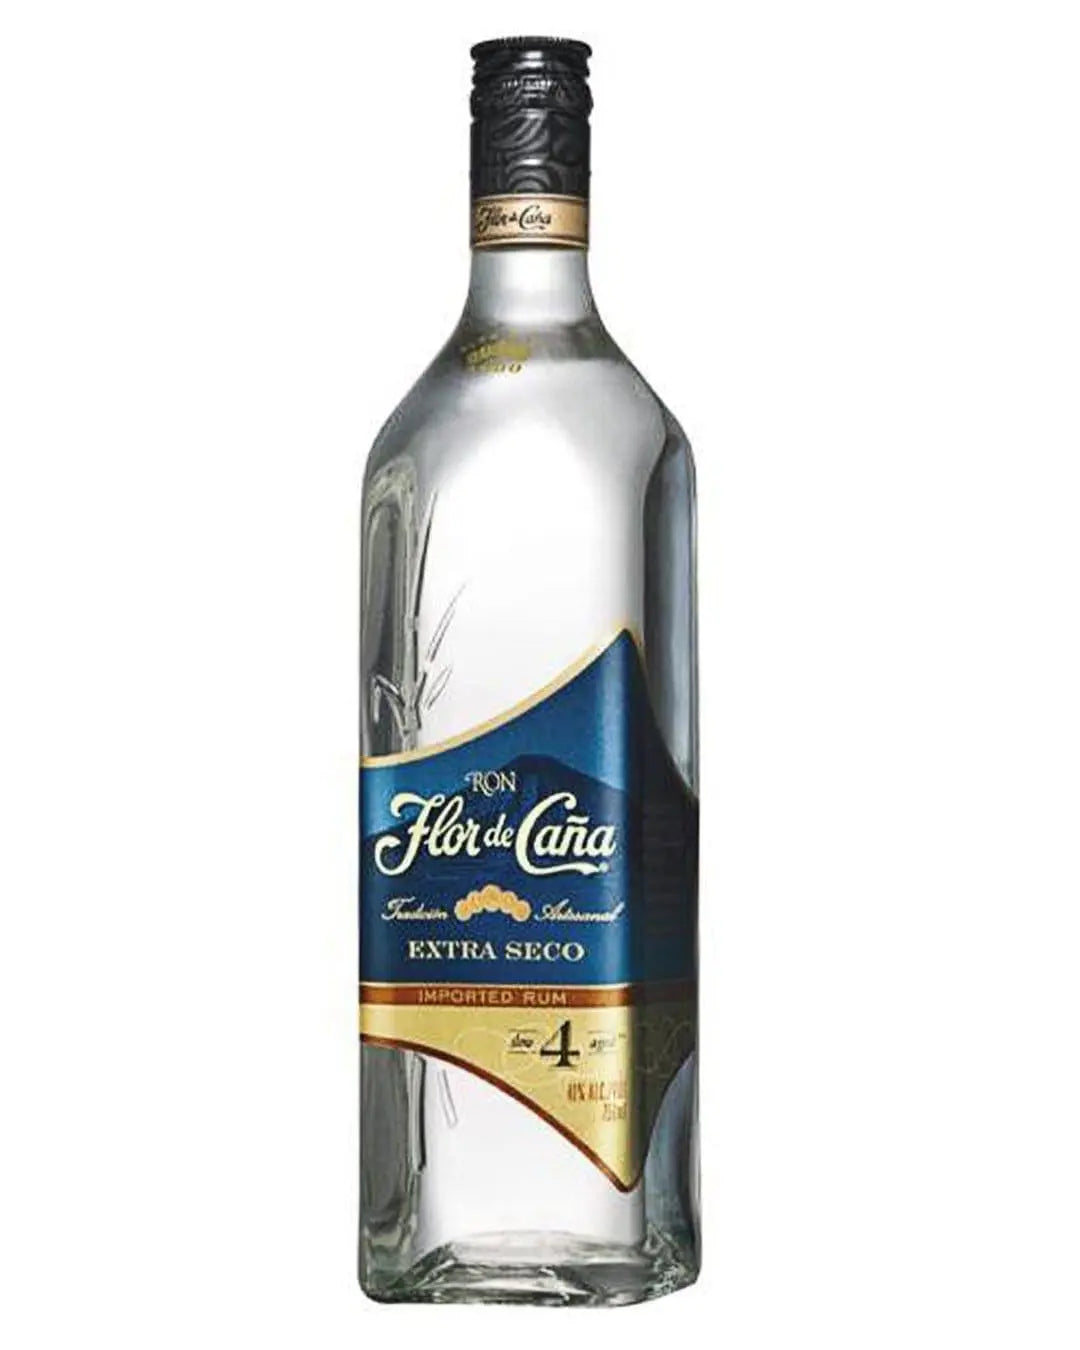 Flor de Caña Blanco Reserva Rum, 70 cl Rum 7431008101001